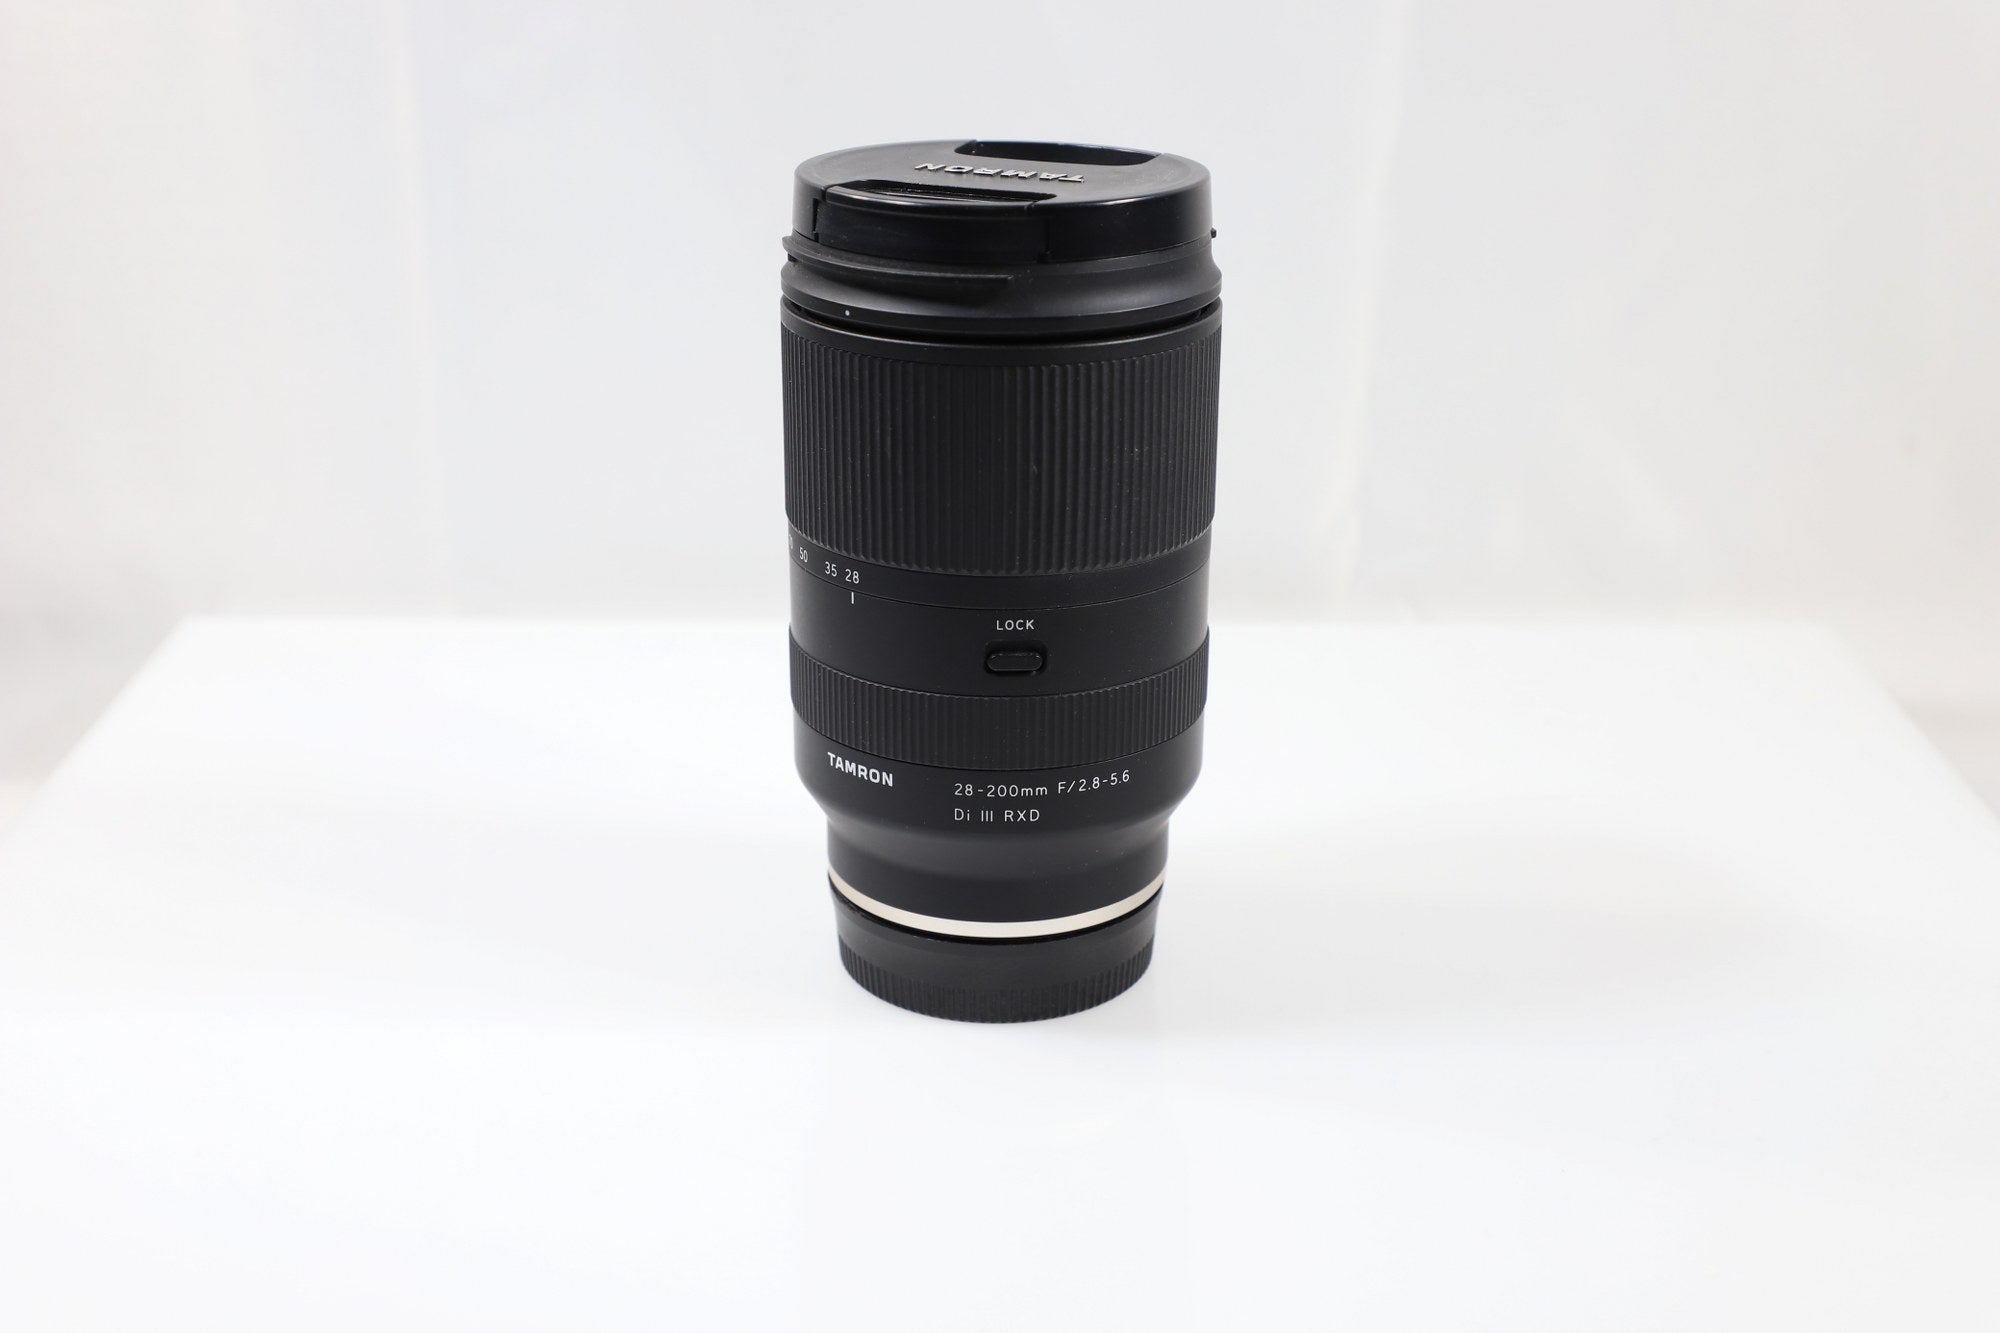 Tamron 28-200mm f/2.8-5.6 Di III RXD Lens -  E-Mount Lens/Full-Frame Format - DOKAN